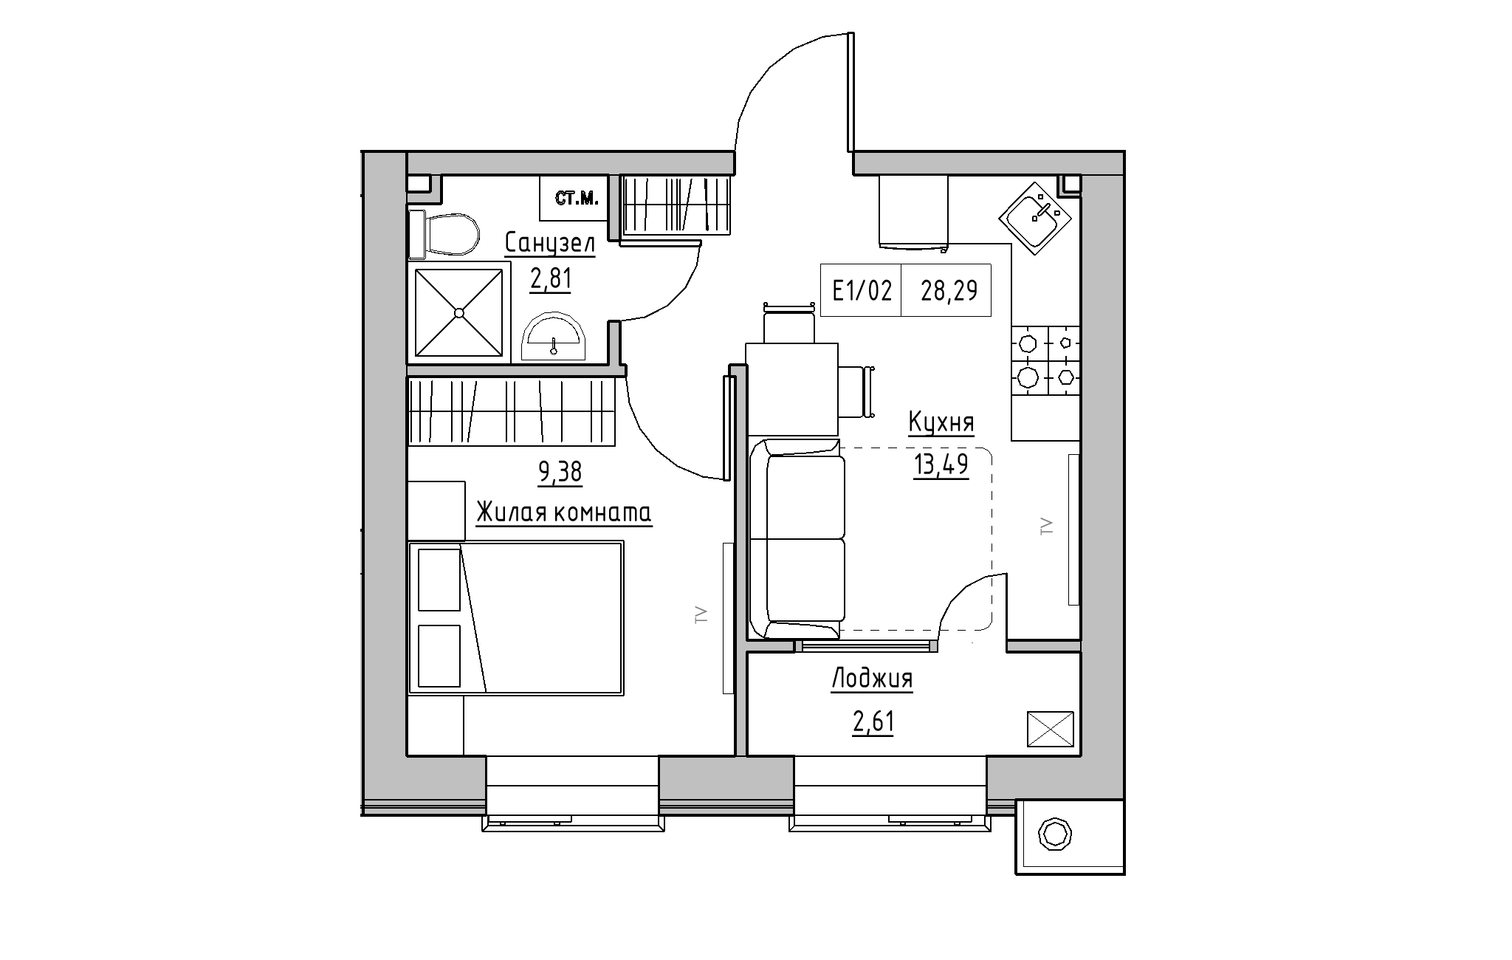 Planning 1-rm flats area 28.29m2, KS-013-04/0013.